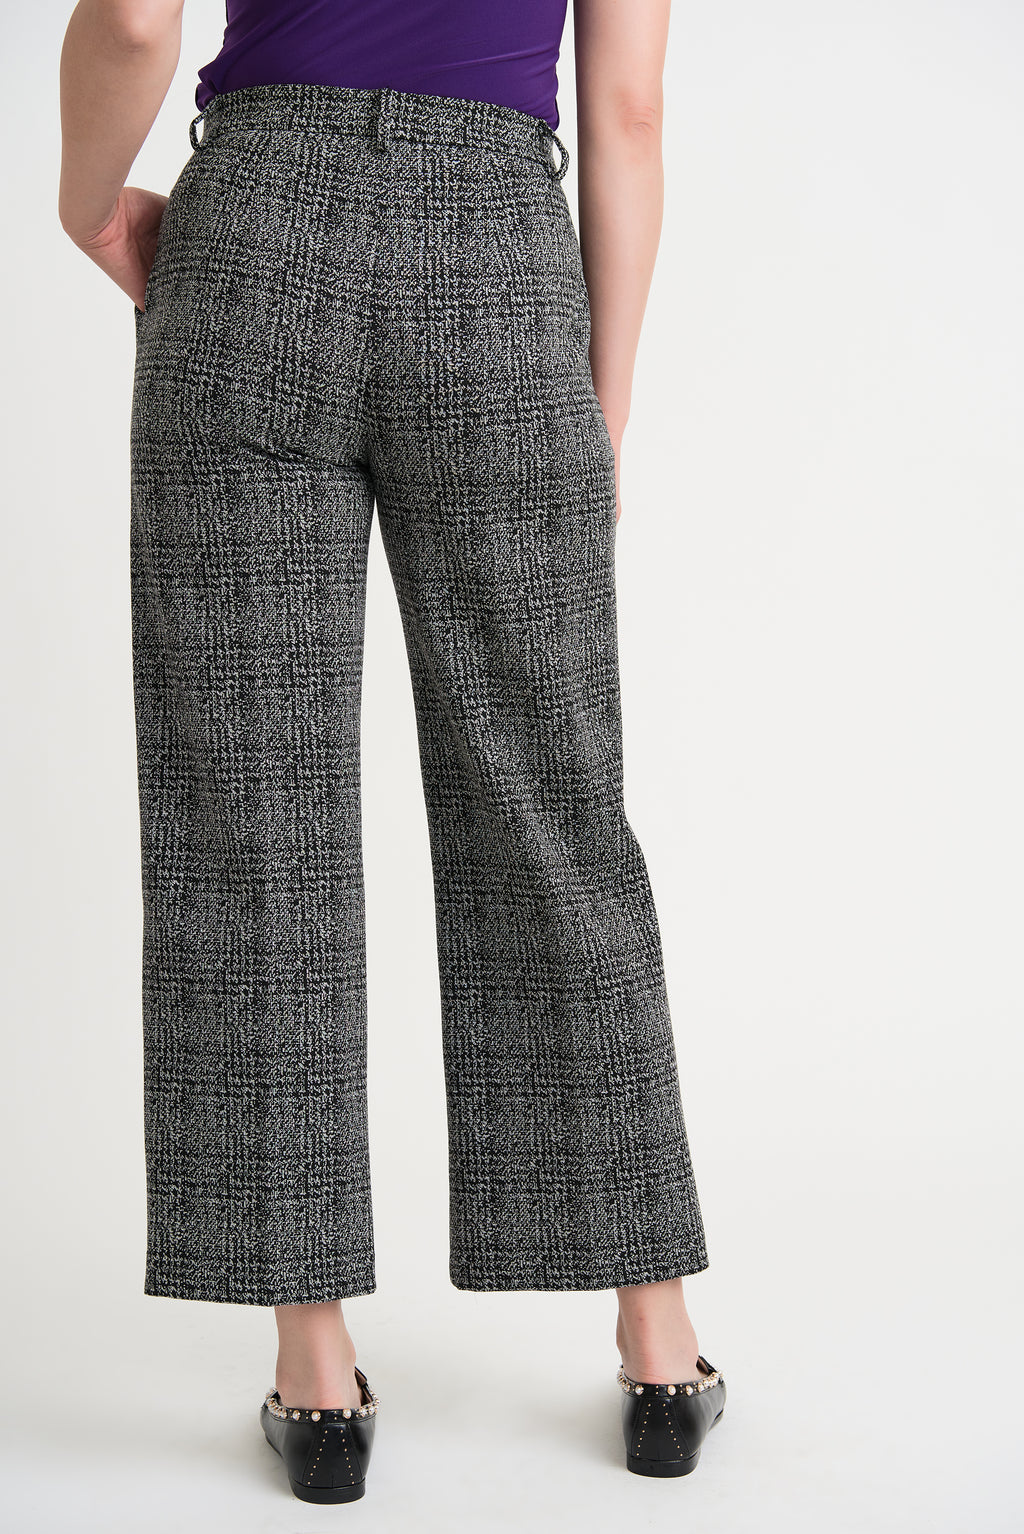 Joseph Ribkoff Black-Grey Pant Style 204110